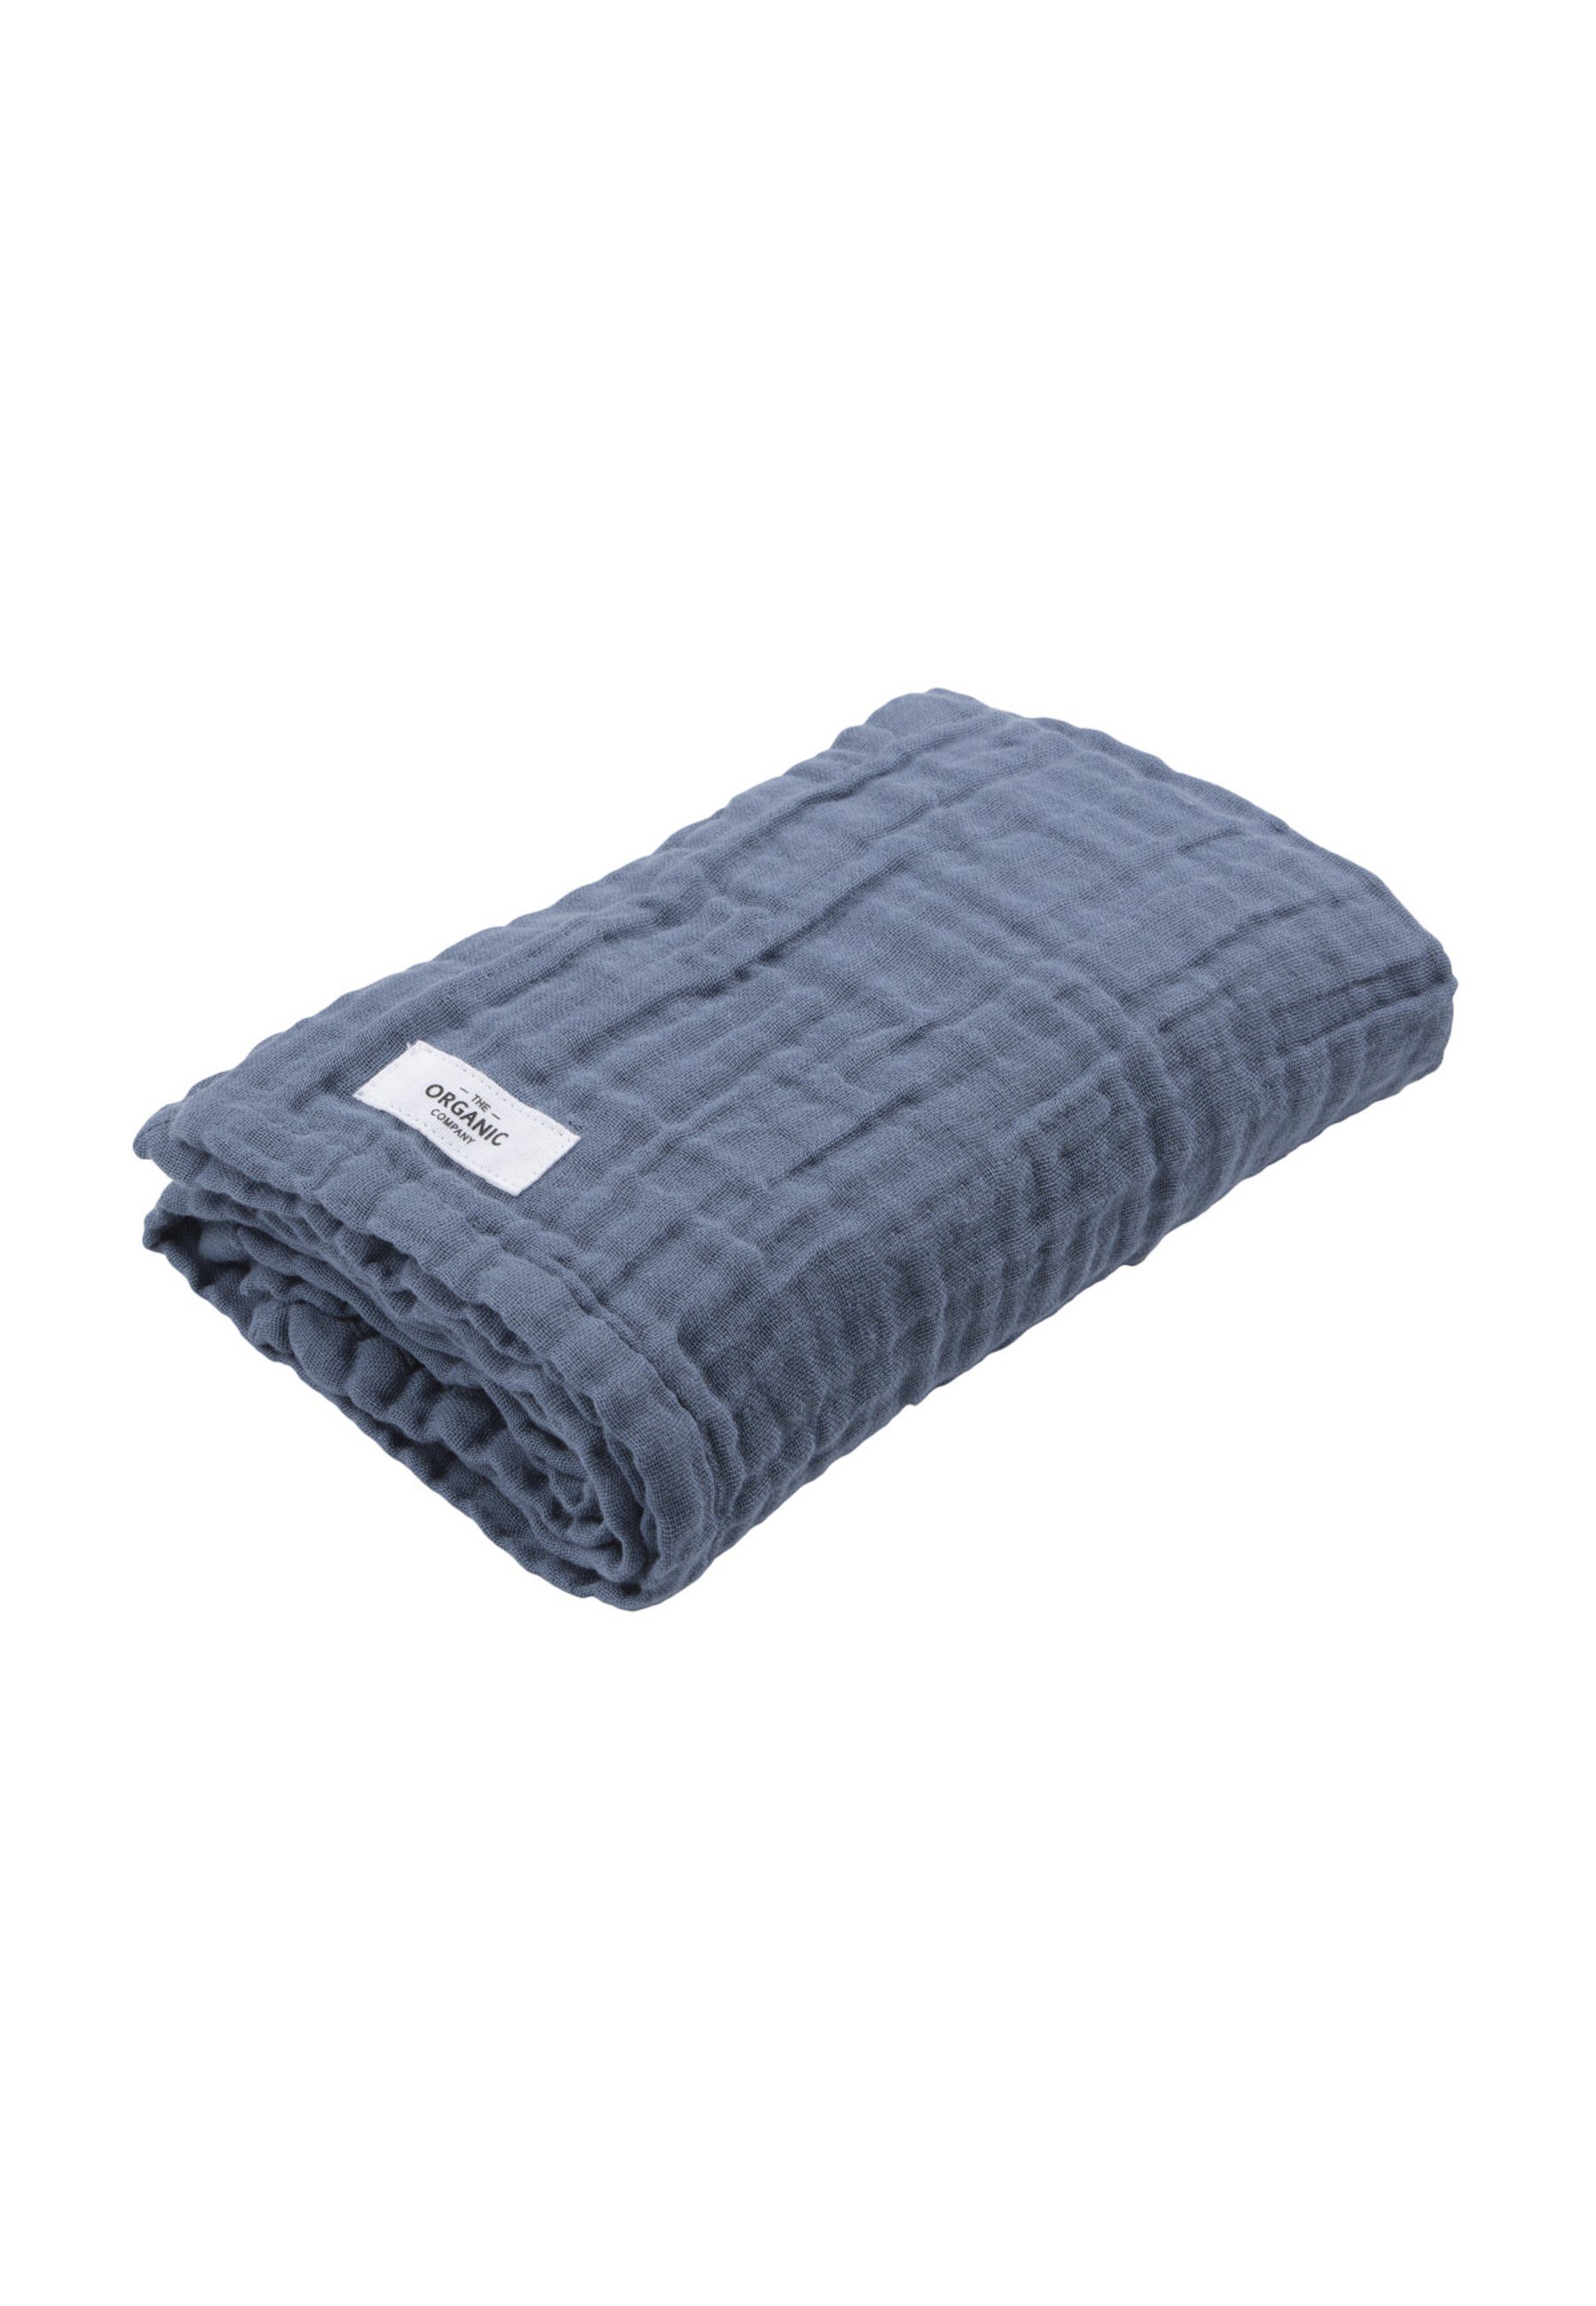 Organic grau/blau Handtuch Grey Gauze, FINE GOTS Company The Blue- Bio-Baumwolle zertifizierte Towel, Hand